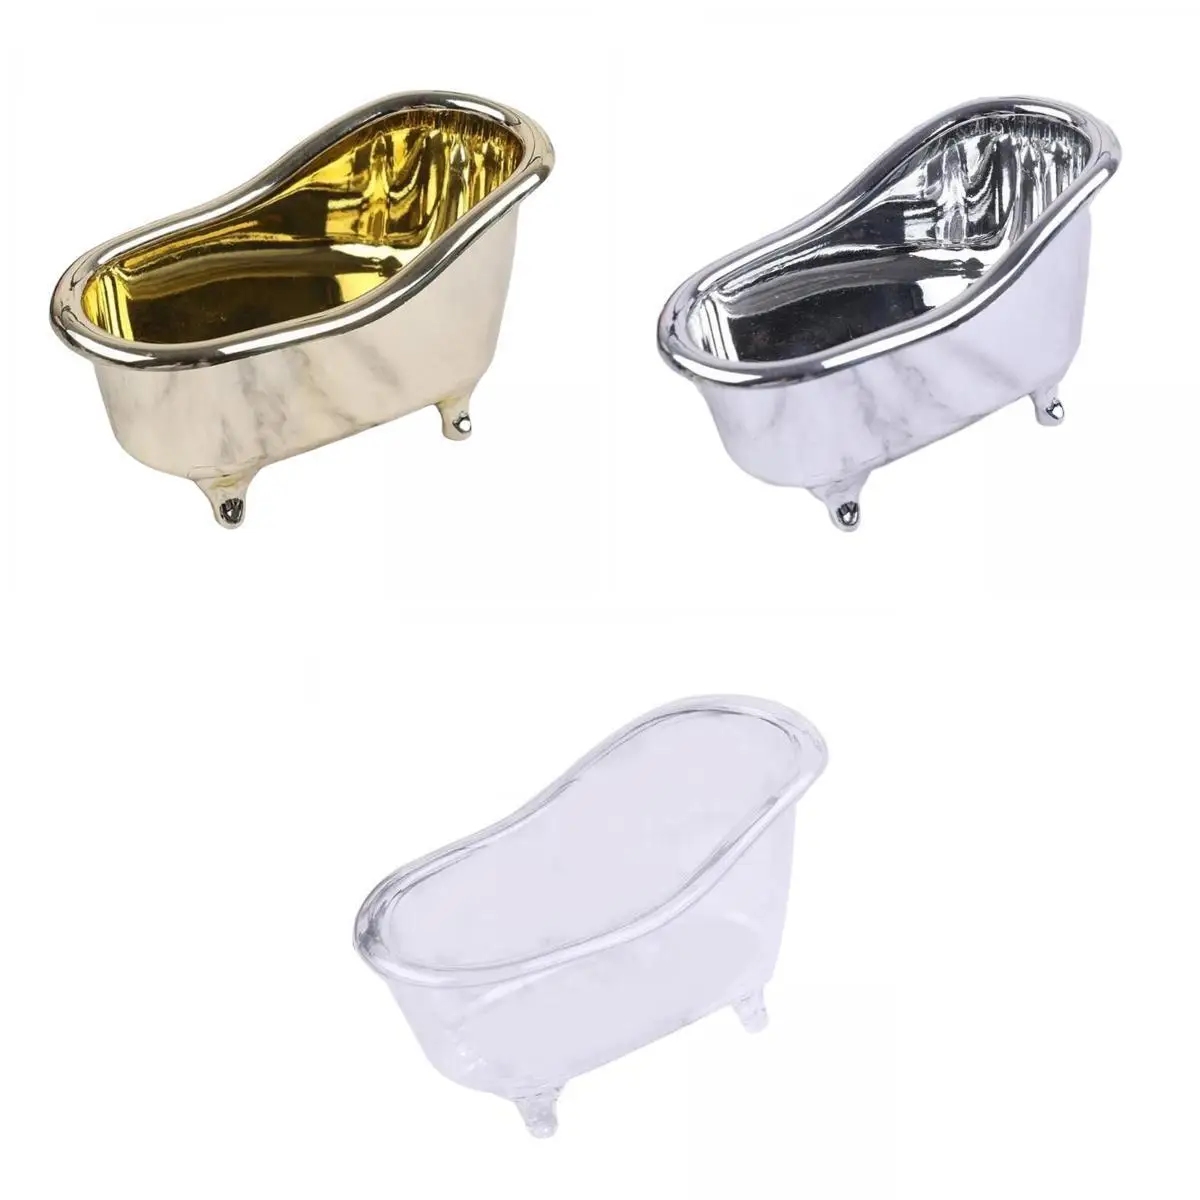 3Pcs Bathtub Soap Dish Holder Decorative Cosmetic Container for Home Decor Counter Bathroom Accessories